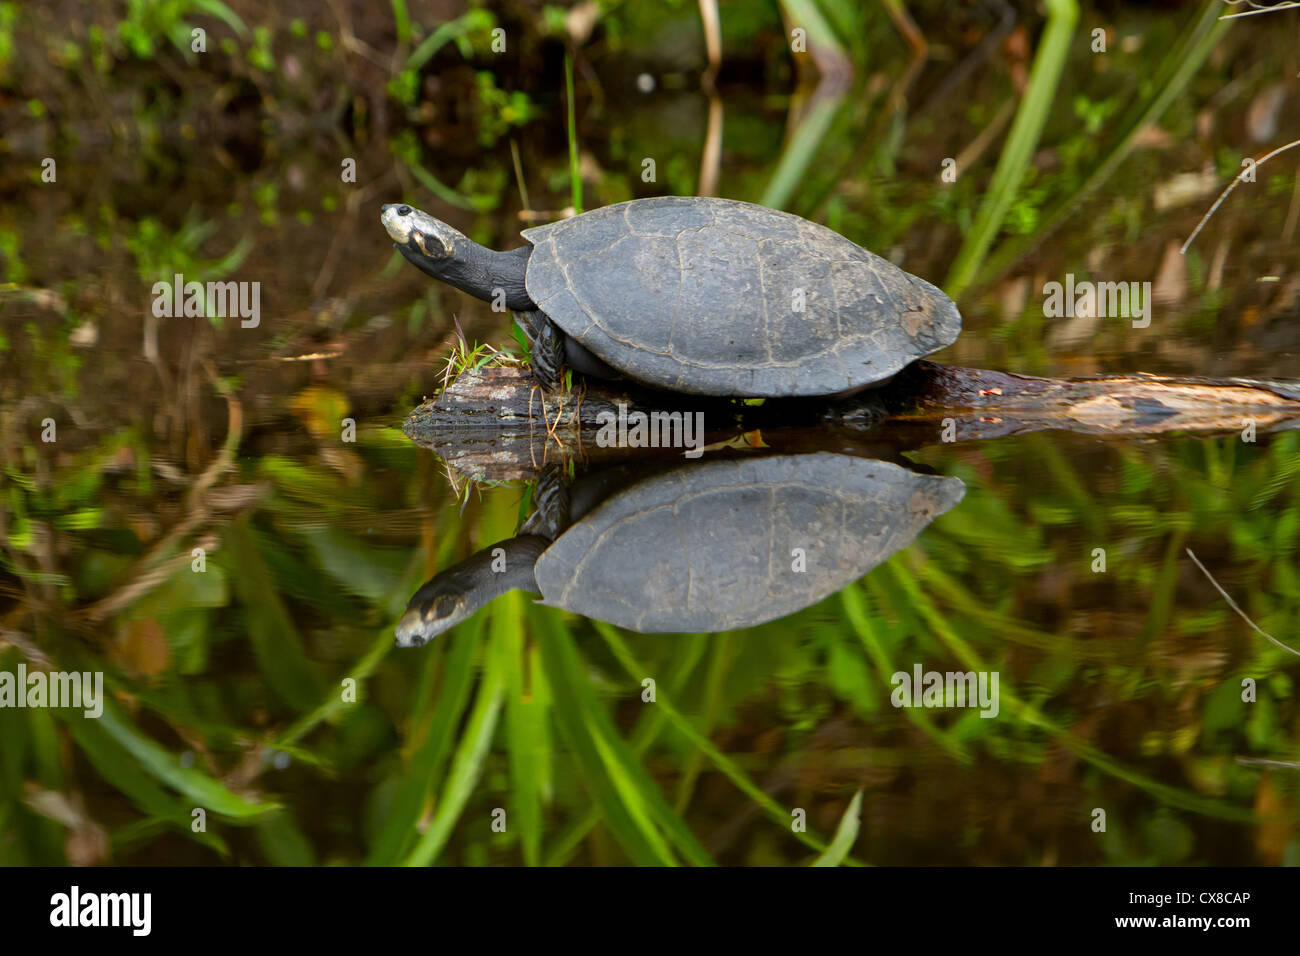 Amazon river turtle on its natural habitat Stock Photo